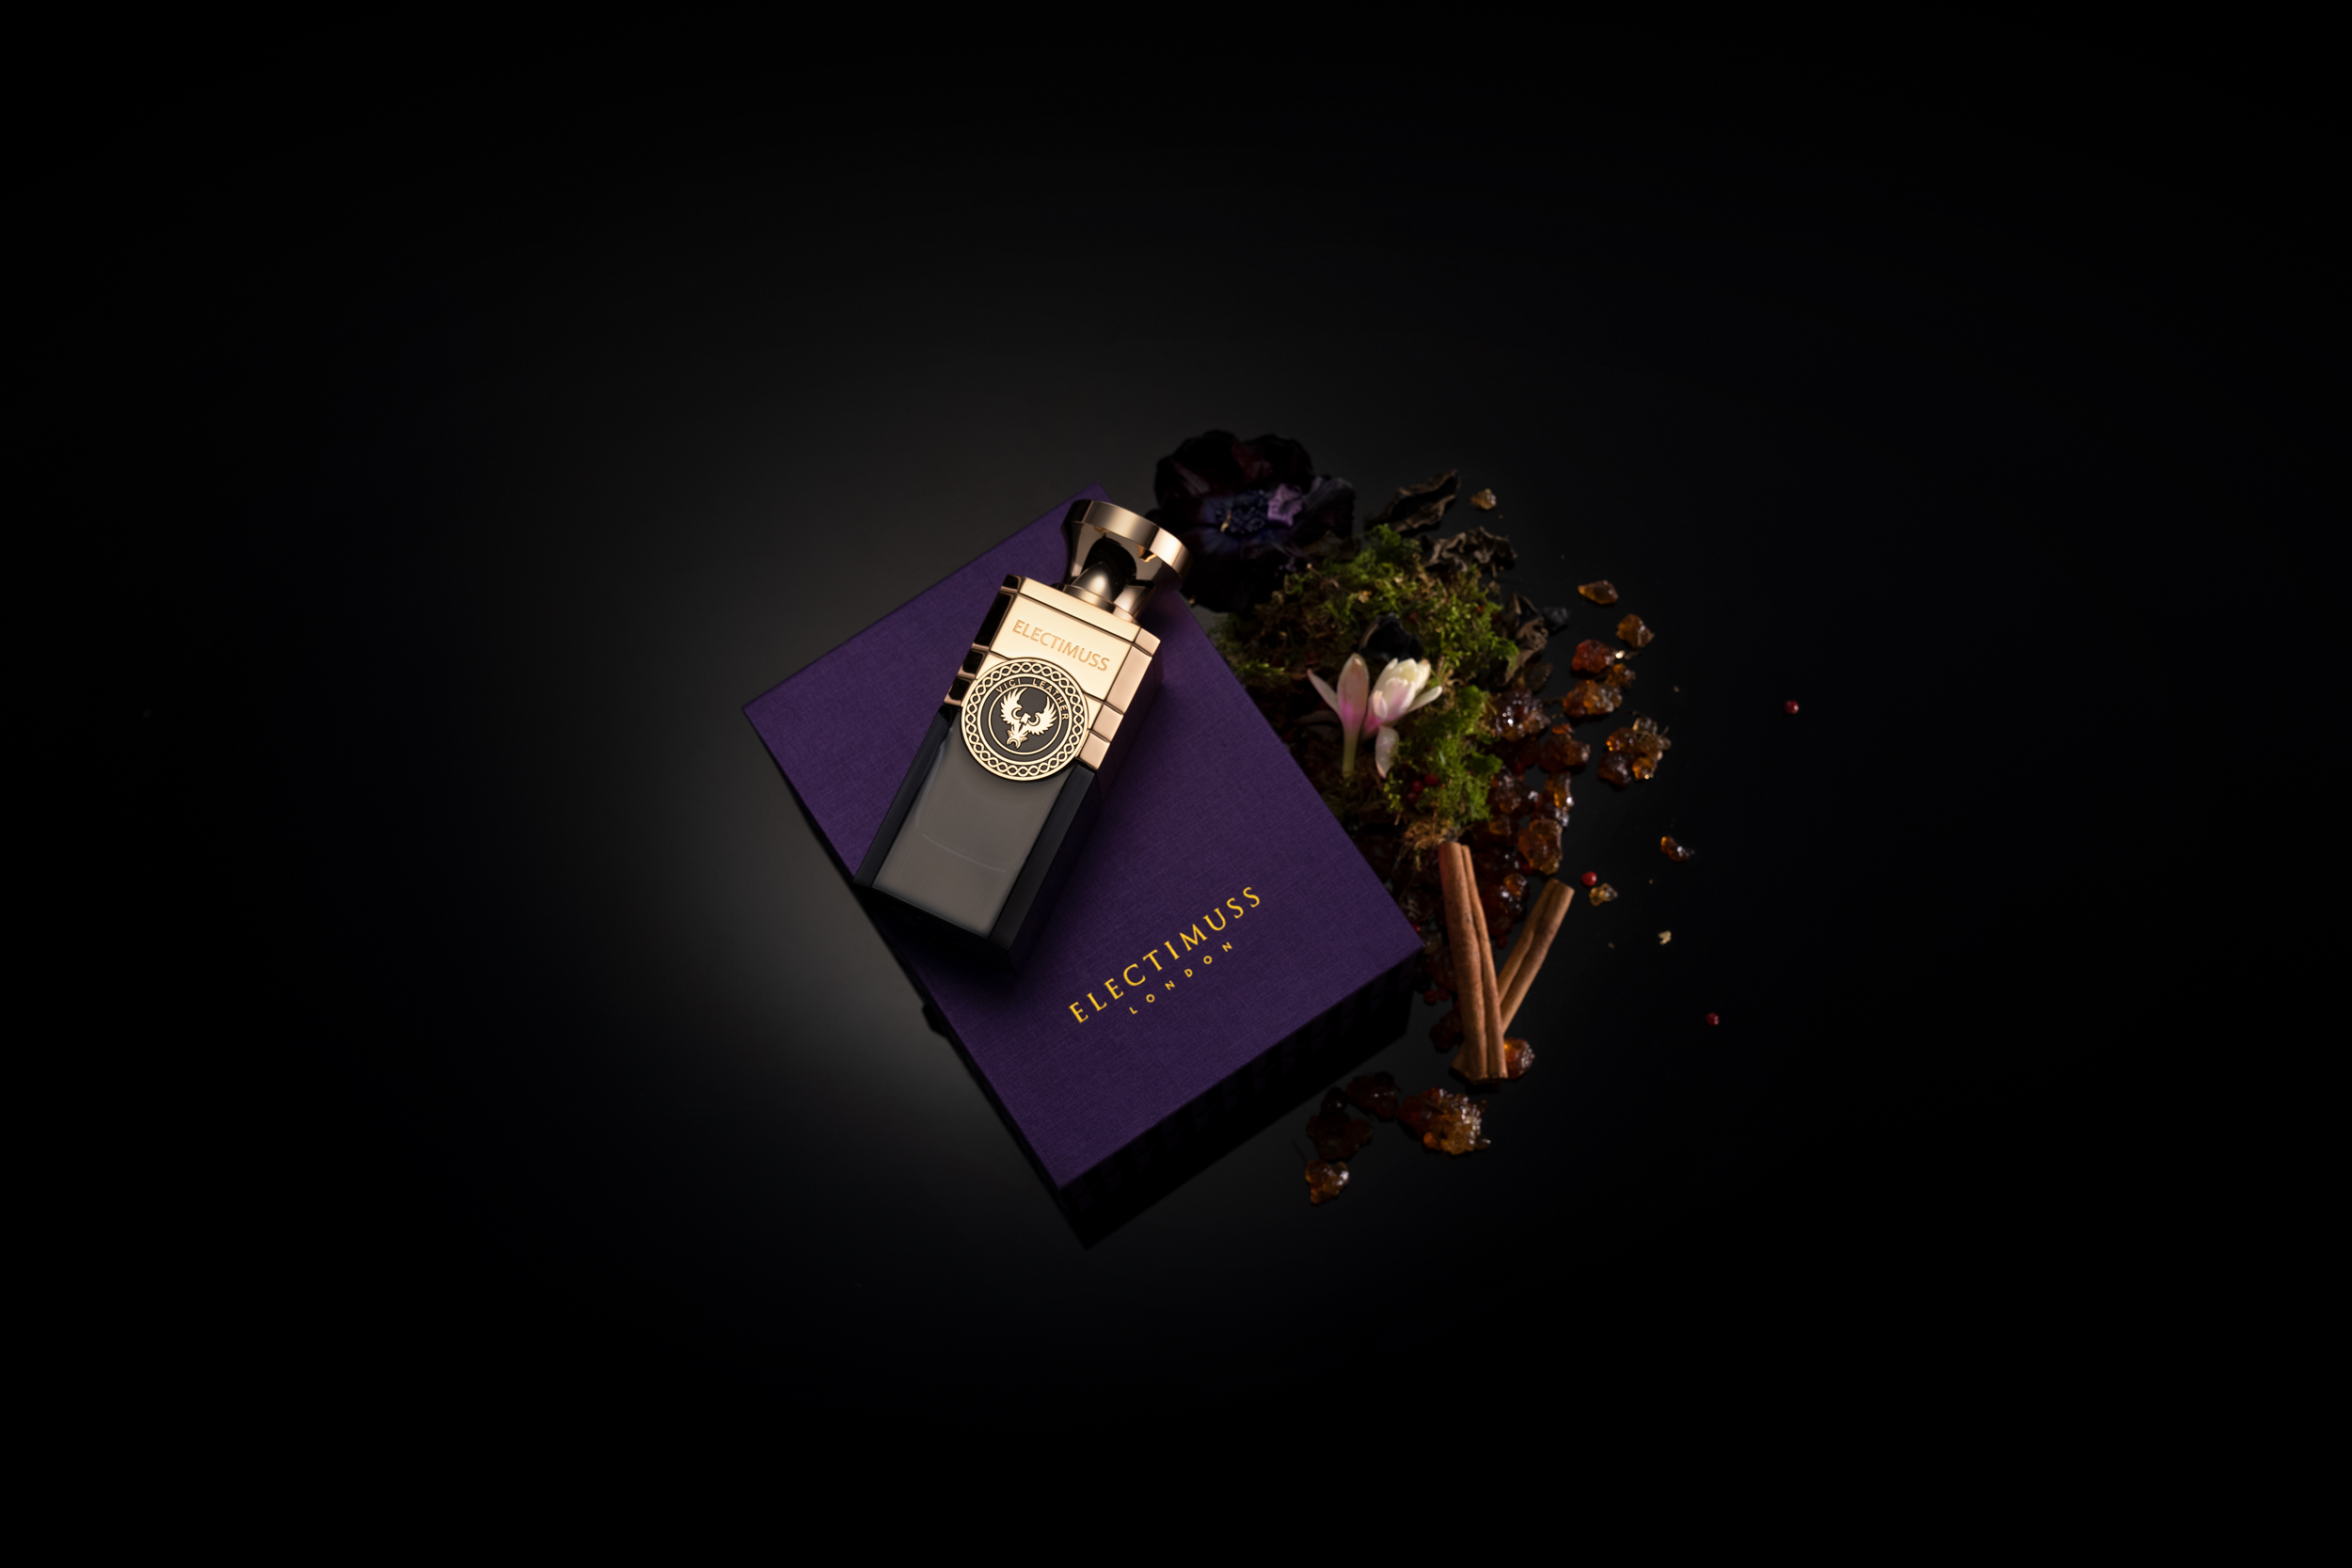 Vici Leather Perfume with presentation box